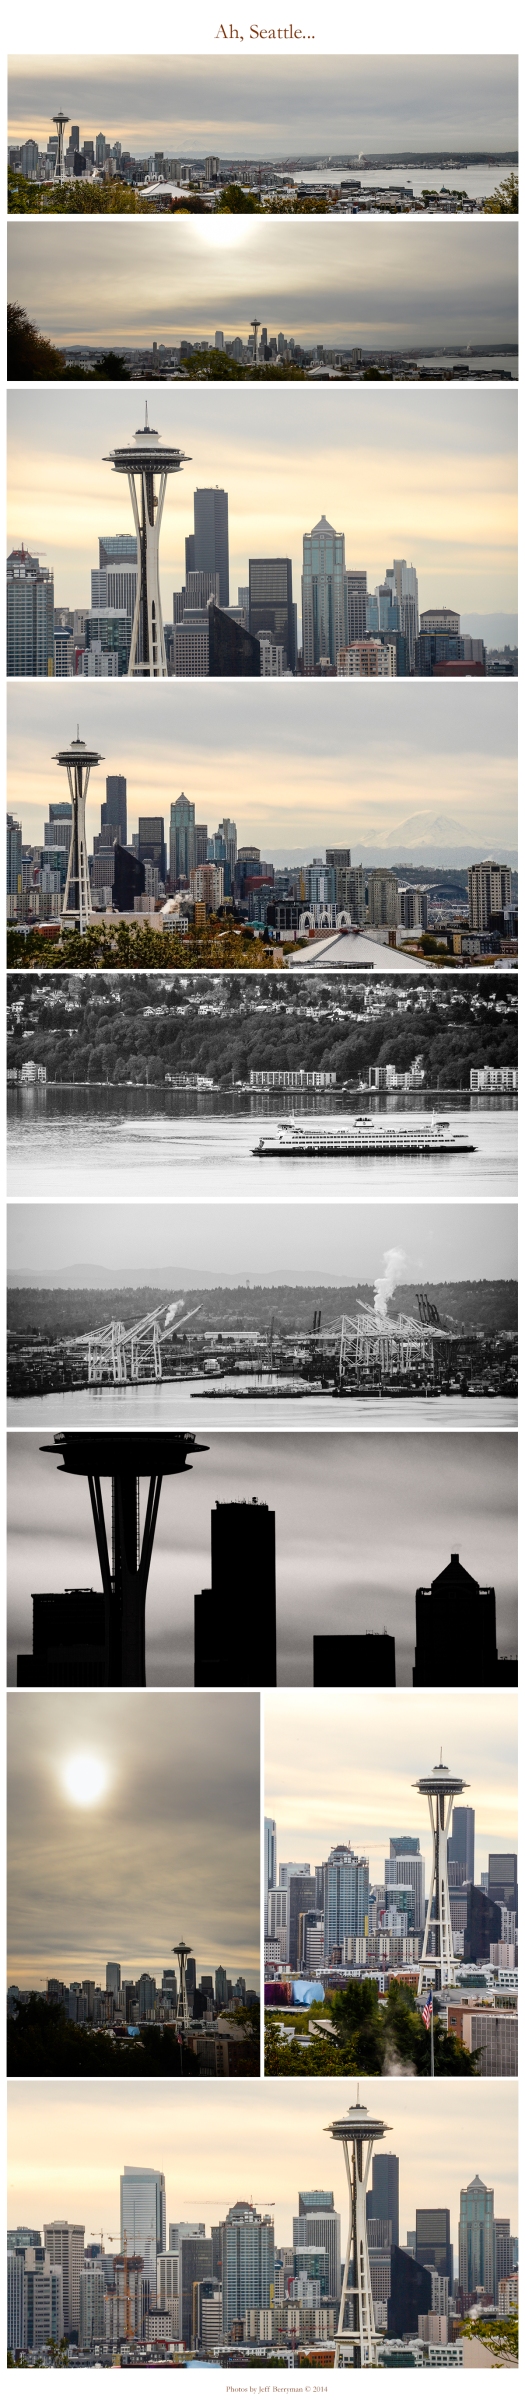 Seattle Skyline Collage